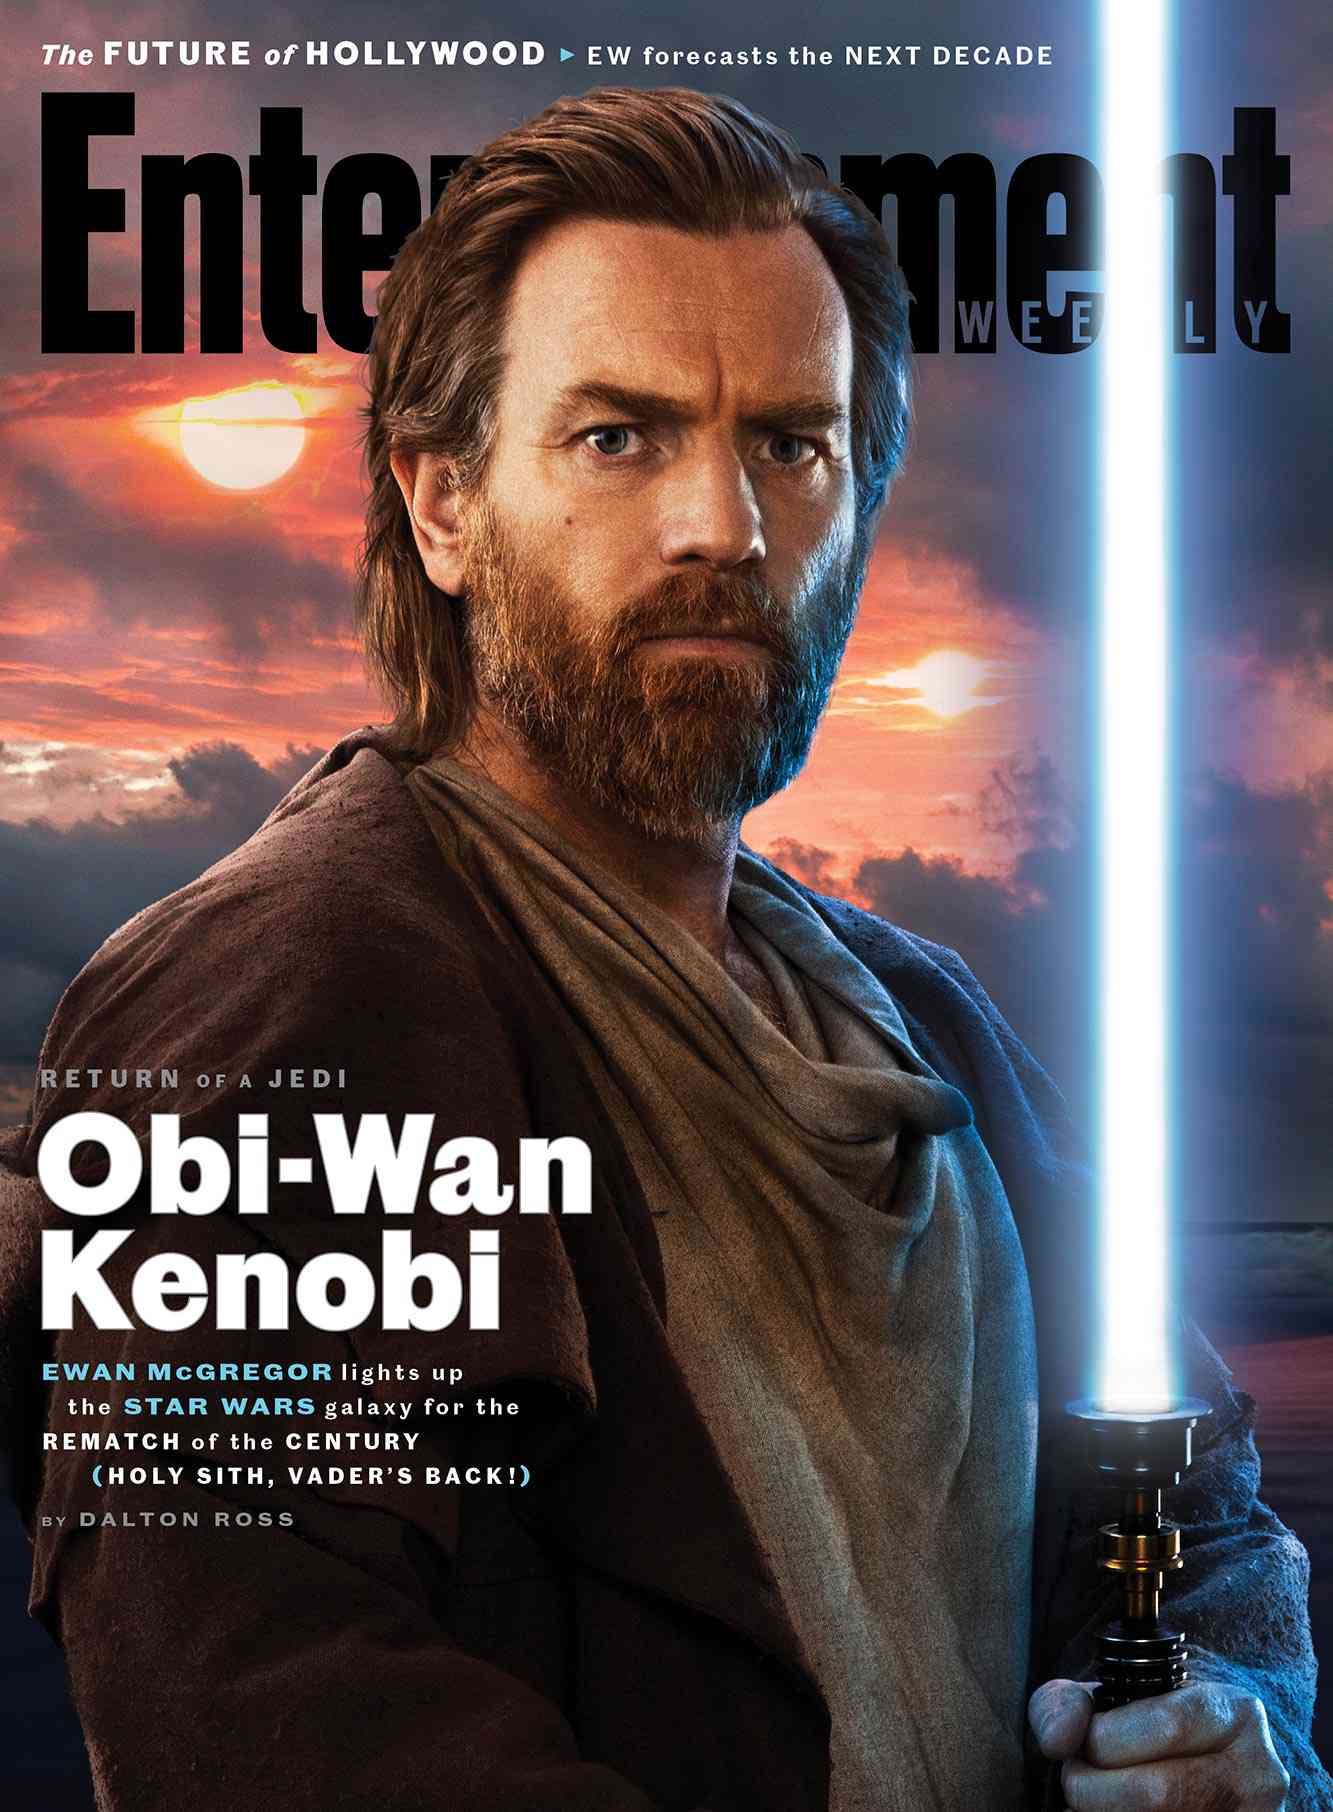 Obi-Wan Kenobi exclusive first-look photos from the new Disney+ series | EW.com